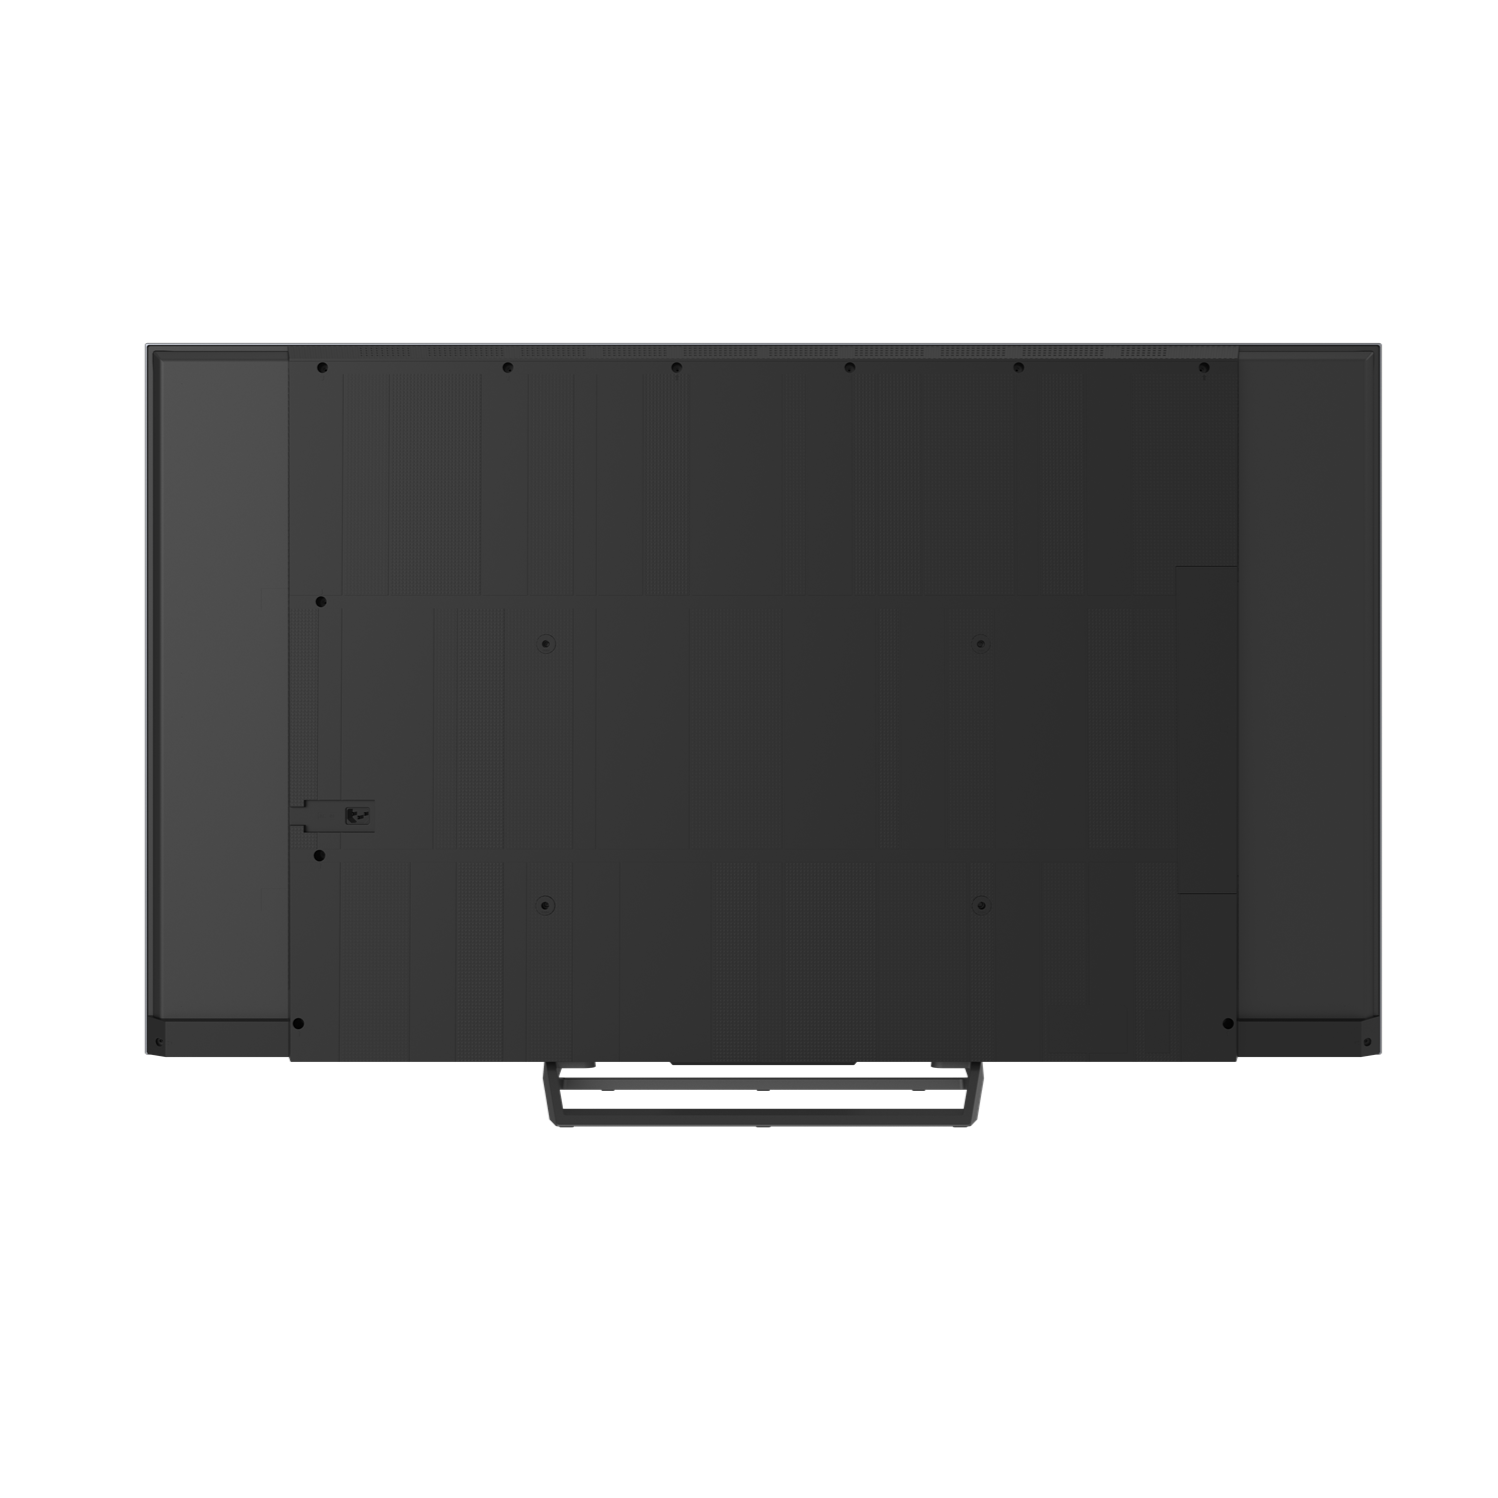 سكاي وورث 75SUF9660 تلفزيون 75 بوصة ميني ليد 120 هرتز  2.1 HDM (جوجل تي في)